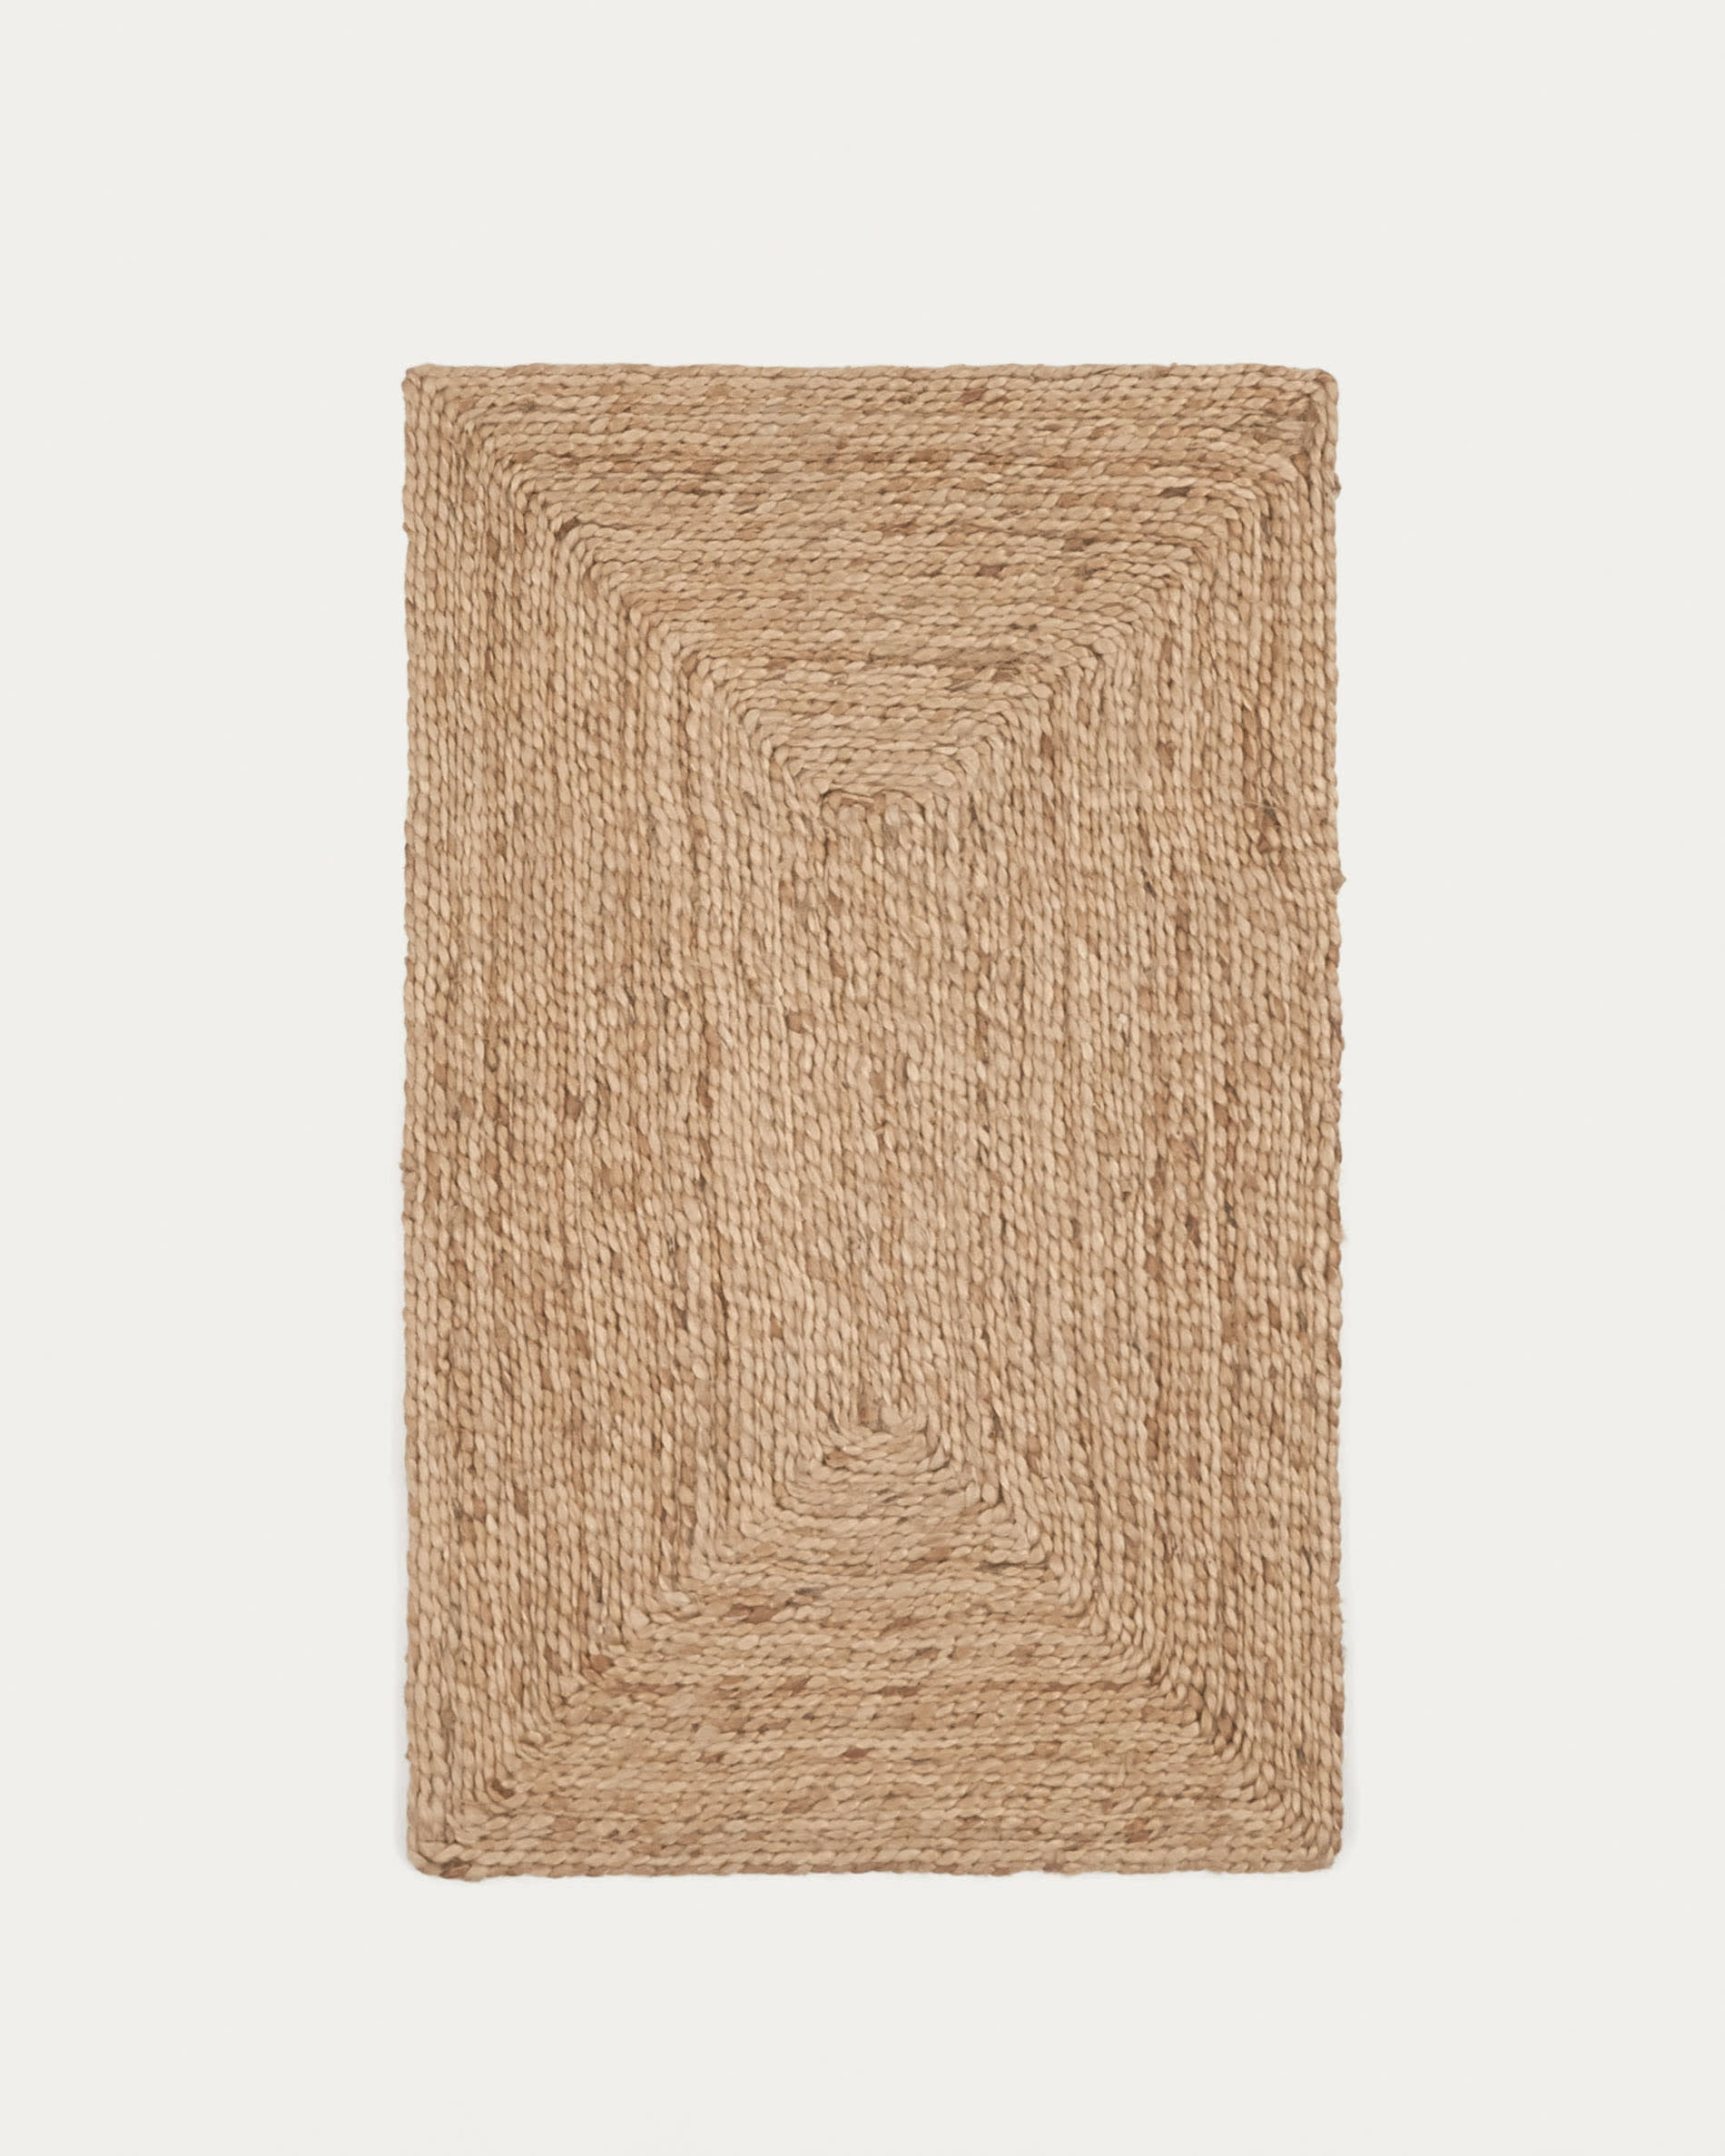 CASAVANI Natural Fiber Collection - Alfombra rectangular de 7 x 10 pies,  alfombra de yute trenzada geométrica beige de 0.27 pulgadas de grosor,  ideal